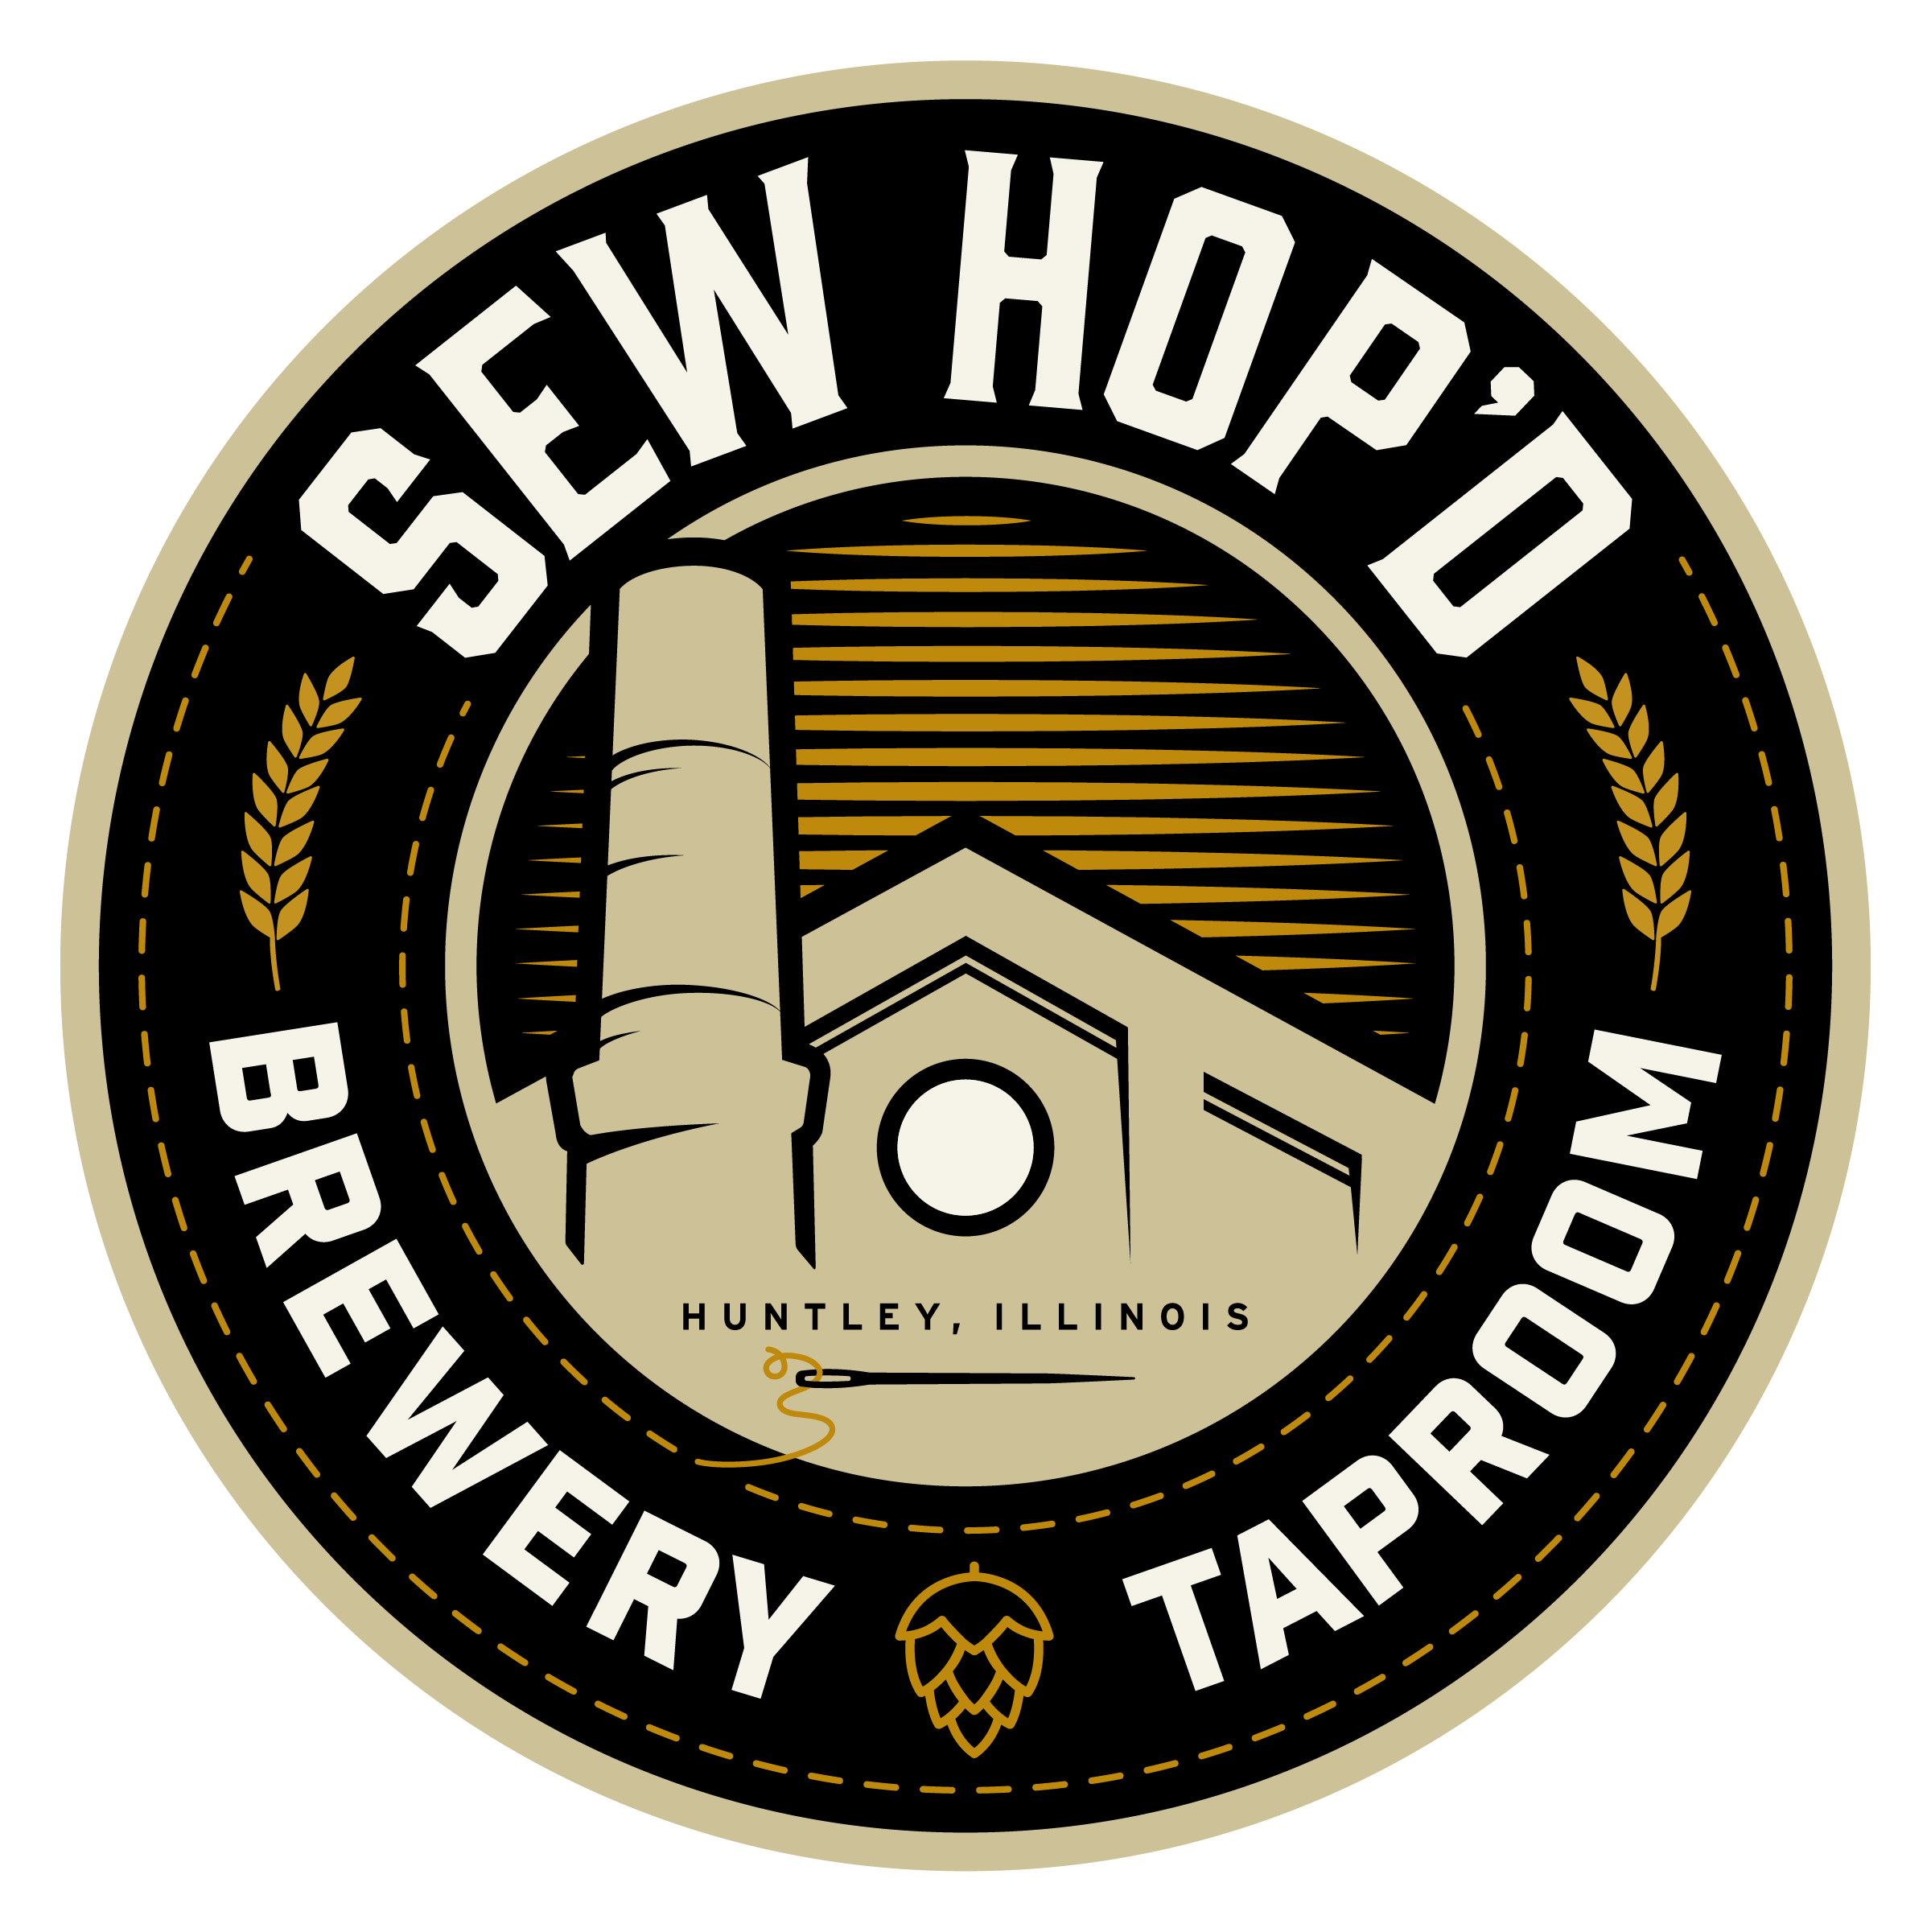 Sew Hop'd Brewery LLC